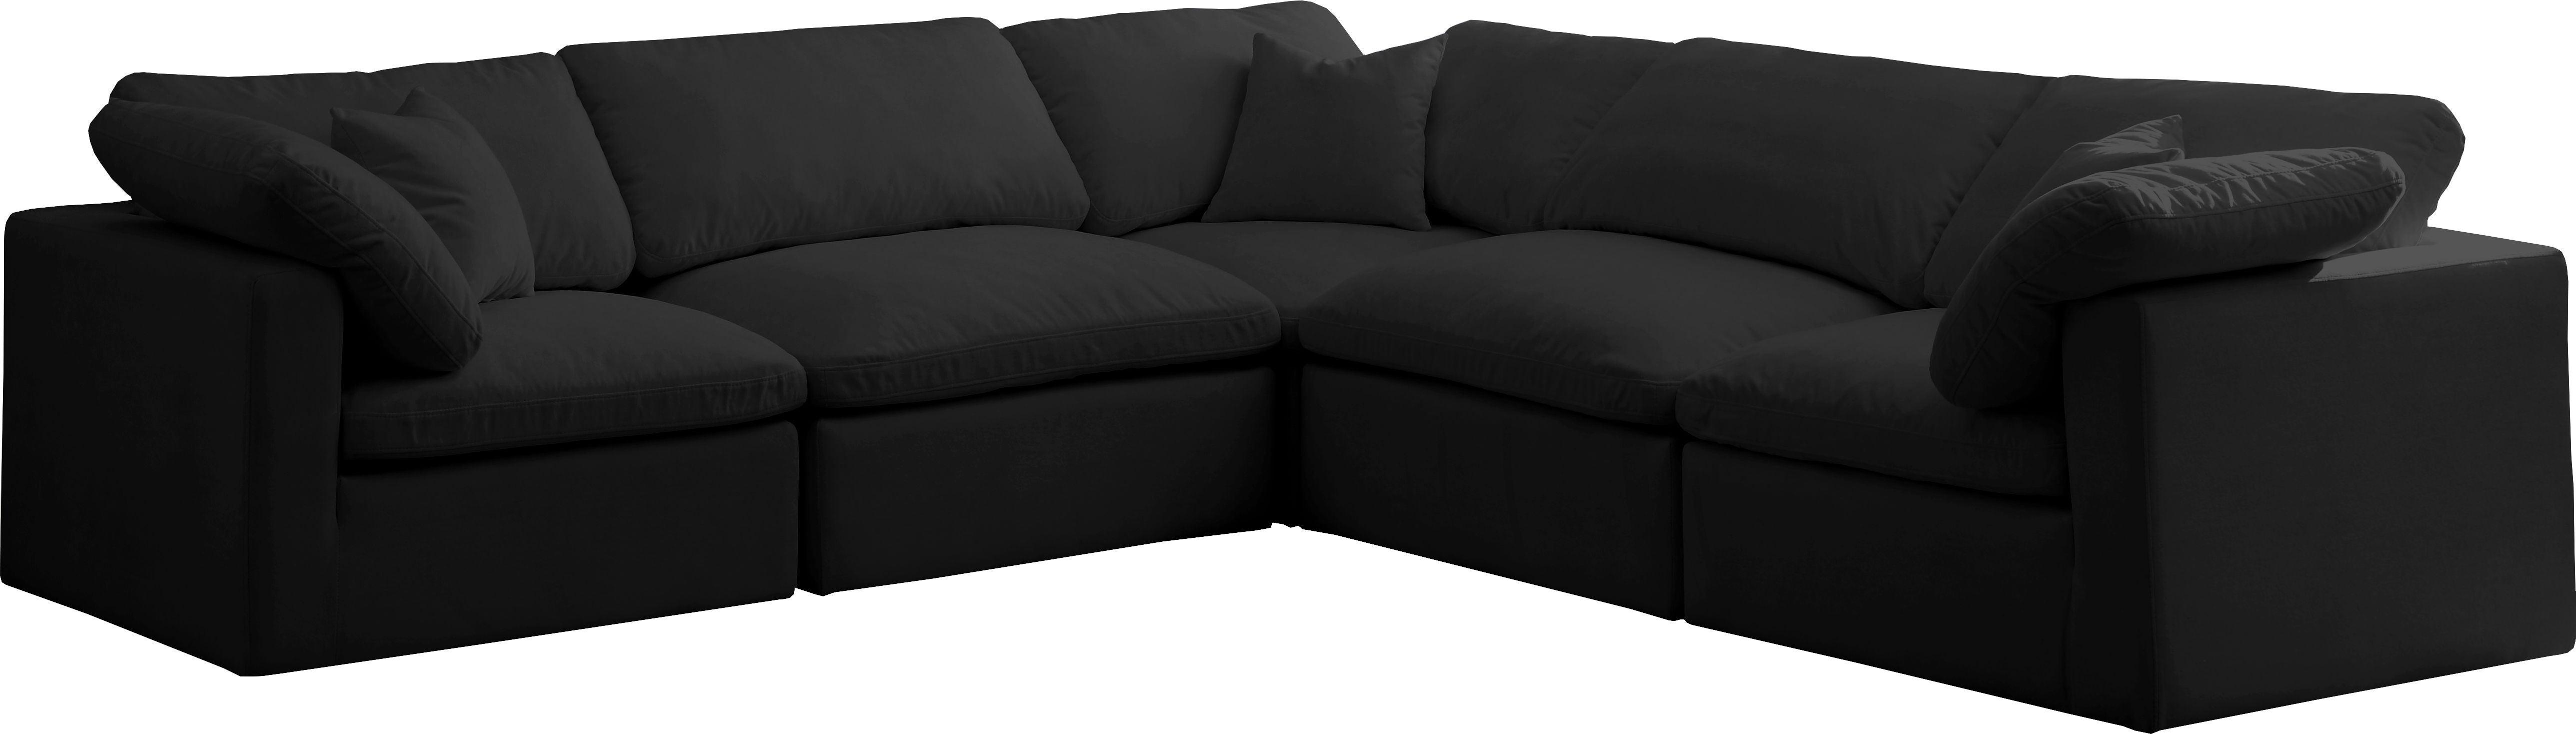 Meridian Furniture - Plush - Velvet Standart Comfort 5 Piece Modular Sectional - Black - 5th Avenue Furniture